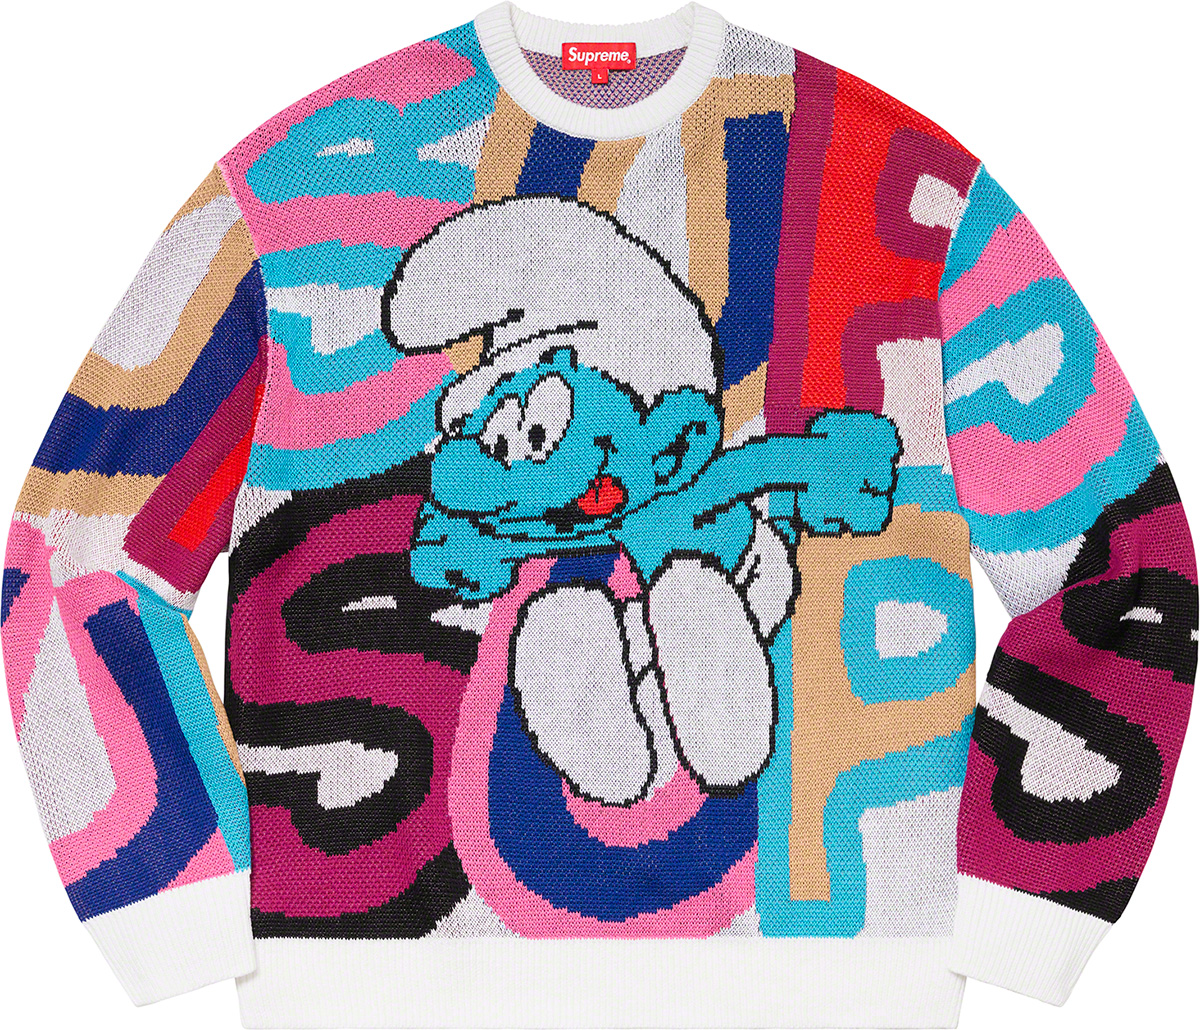 Supreme®/Smurfs™ Sweater